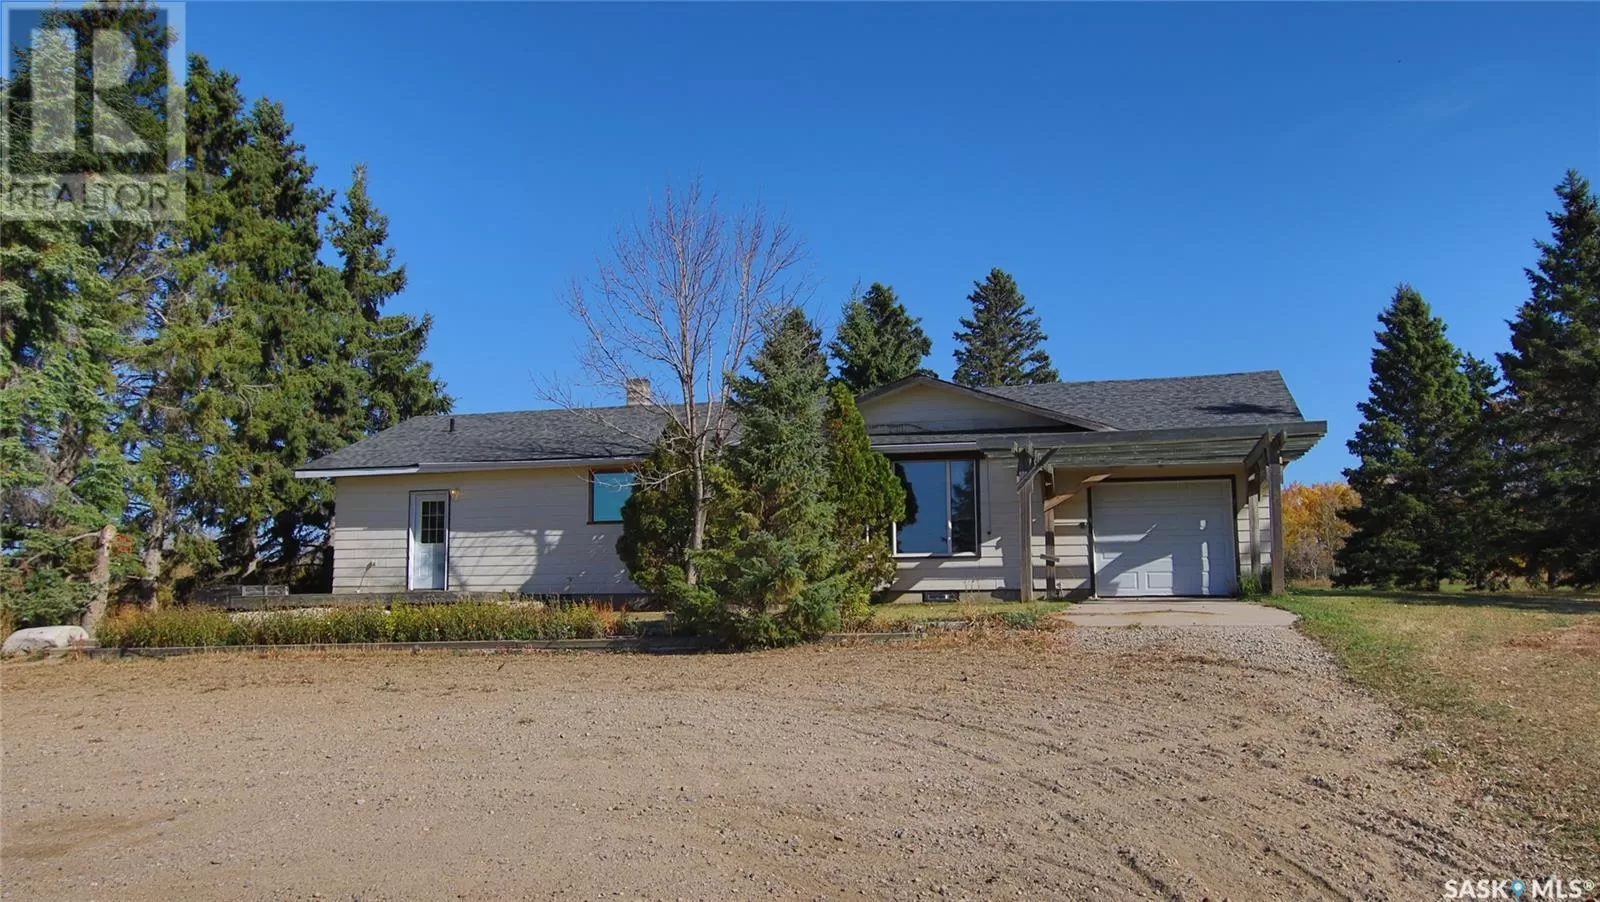 House for rent: Epp Acreage, Laird Rm No. 404, Saskatchewan S0K 3R0